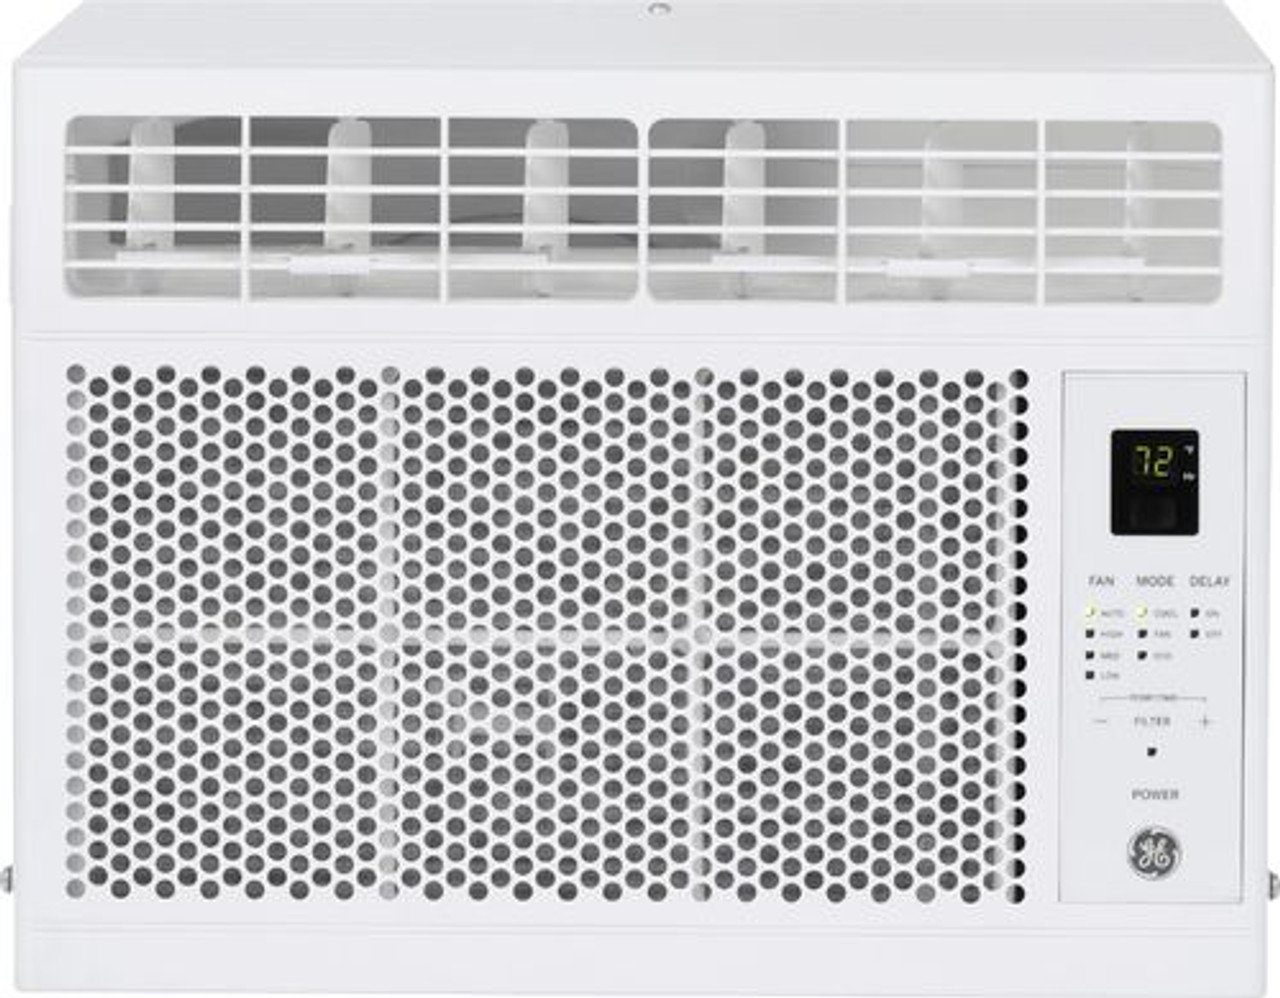 GE - 150 Sq. Ft. 5,050 BTU Window Air Conditioner - White